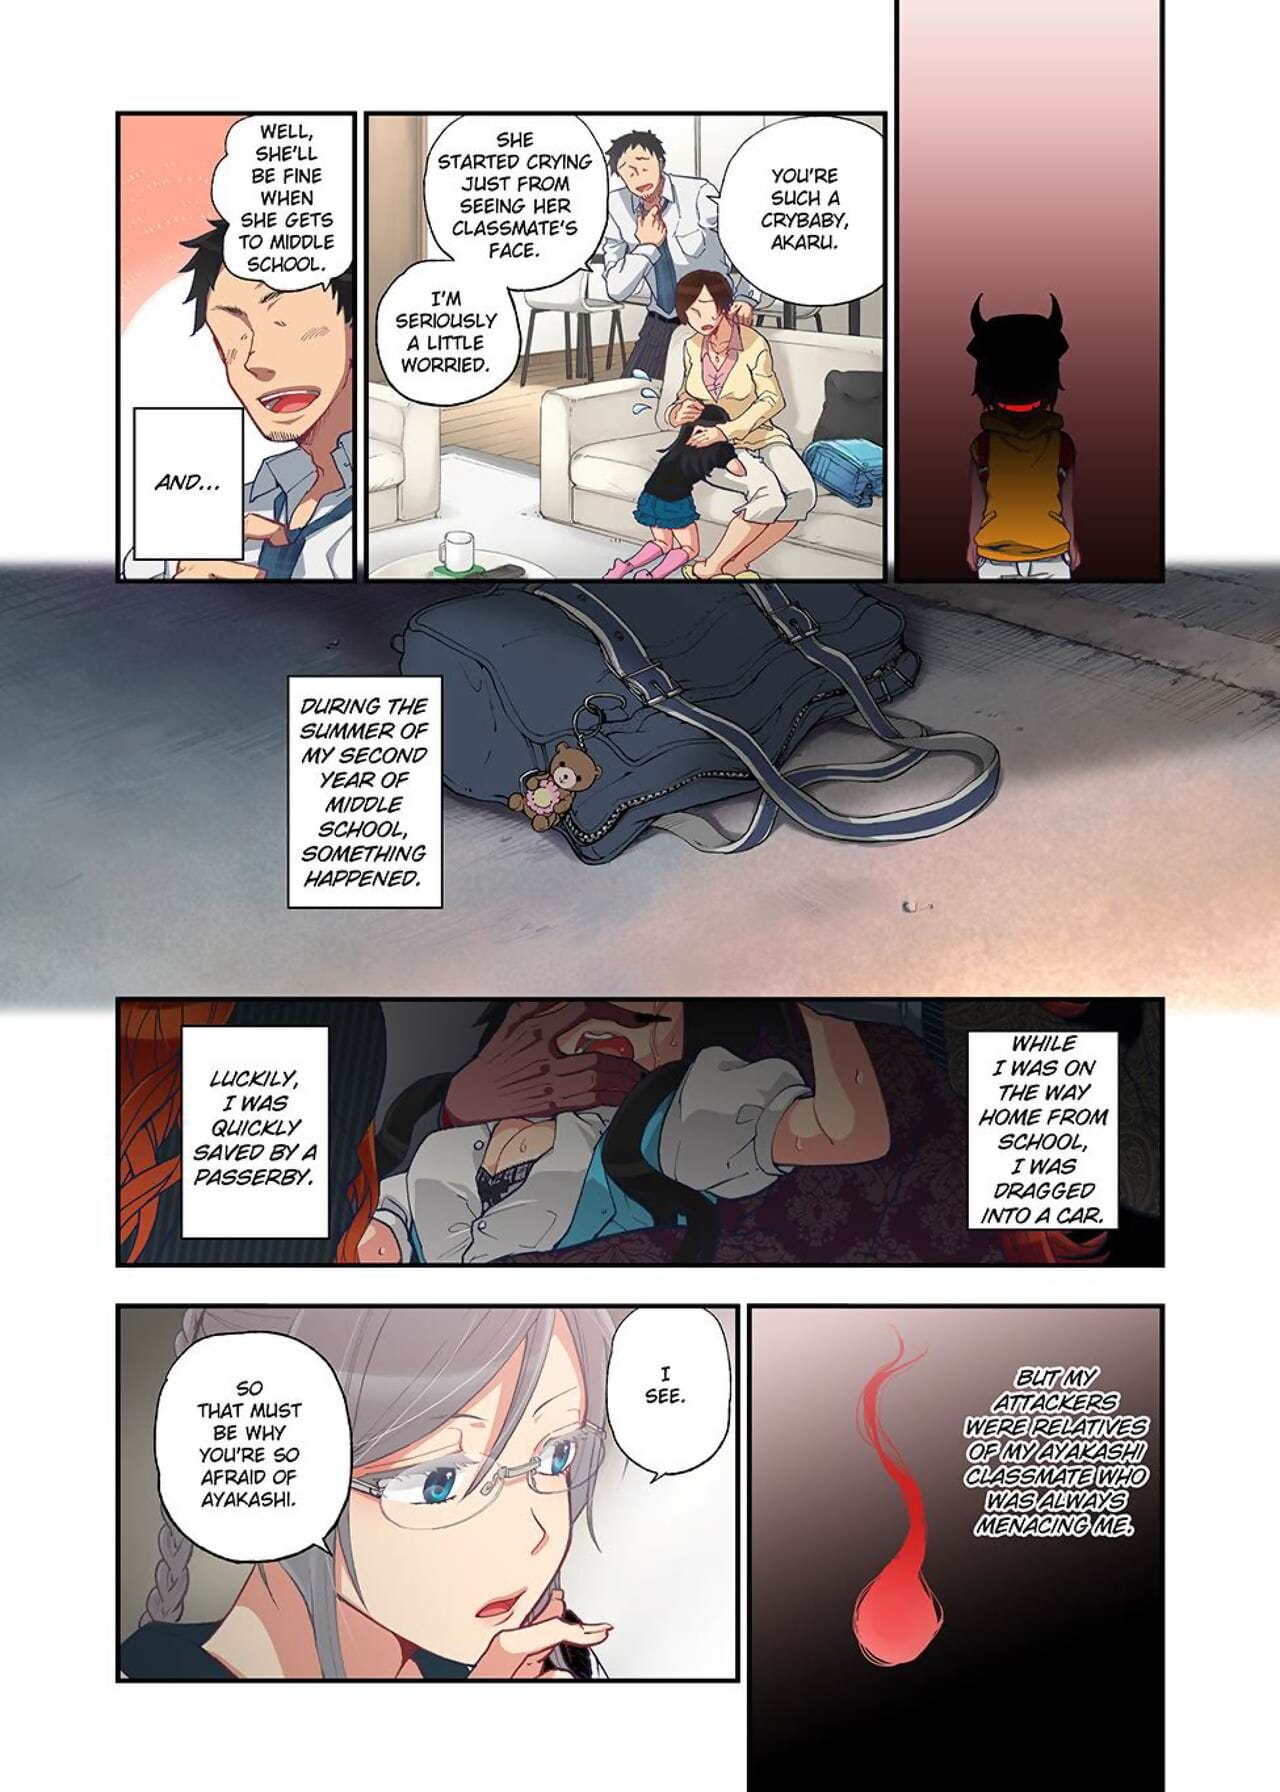 Satou Saori onaka NI ippai ayakashi no tane volumen 1 inglés digital Parte 2